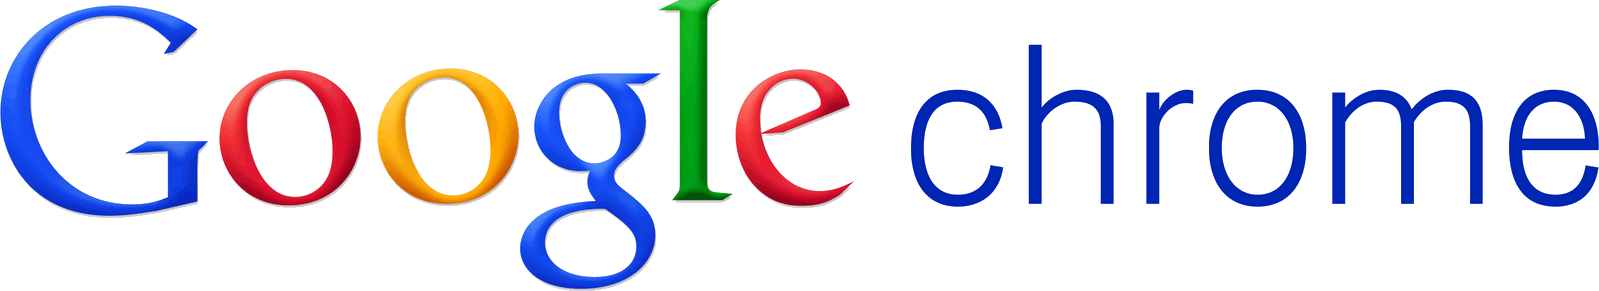 Google Chrome Original Logo - File:Google logo and Chrome wordmark.png - Wikimedia Commons